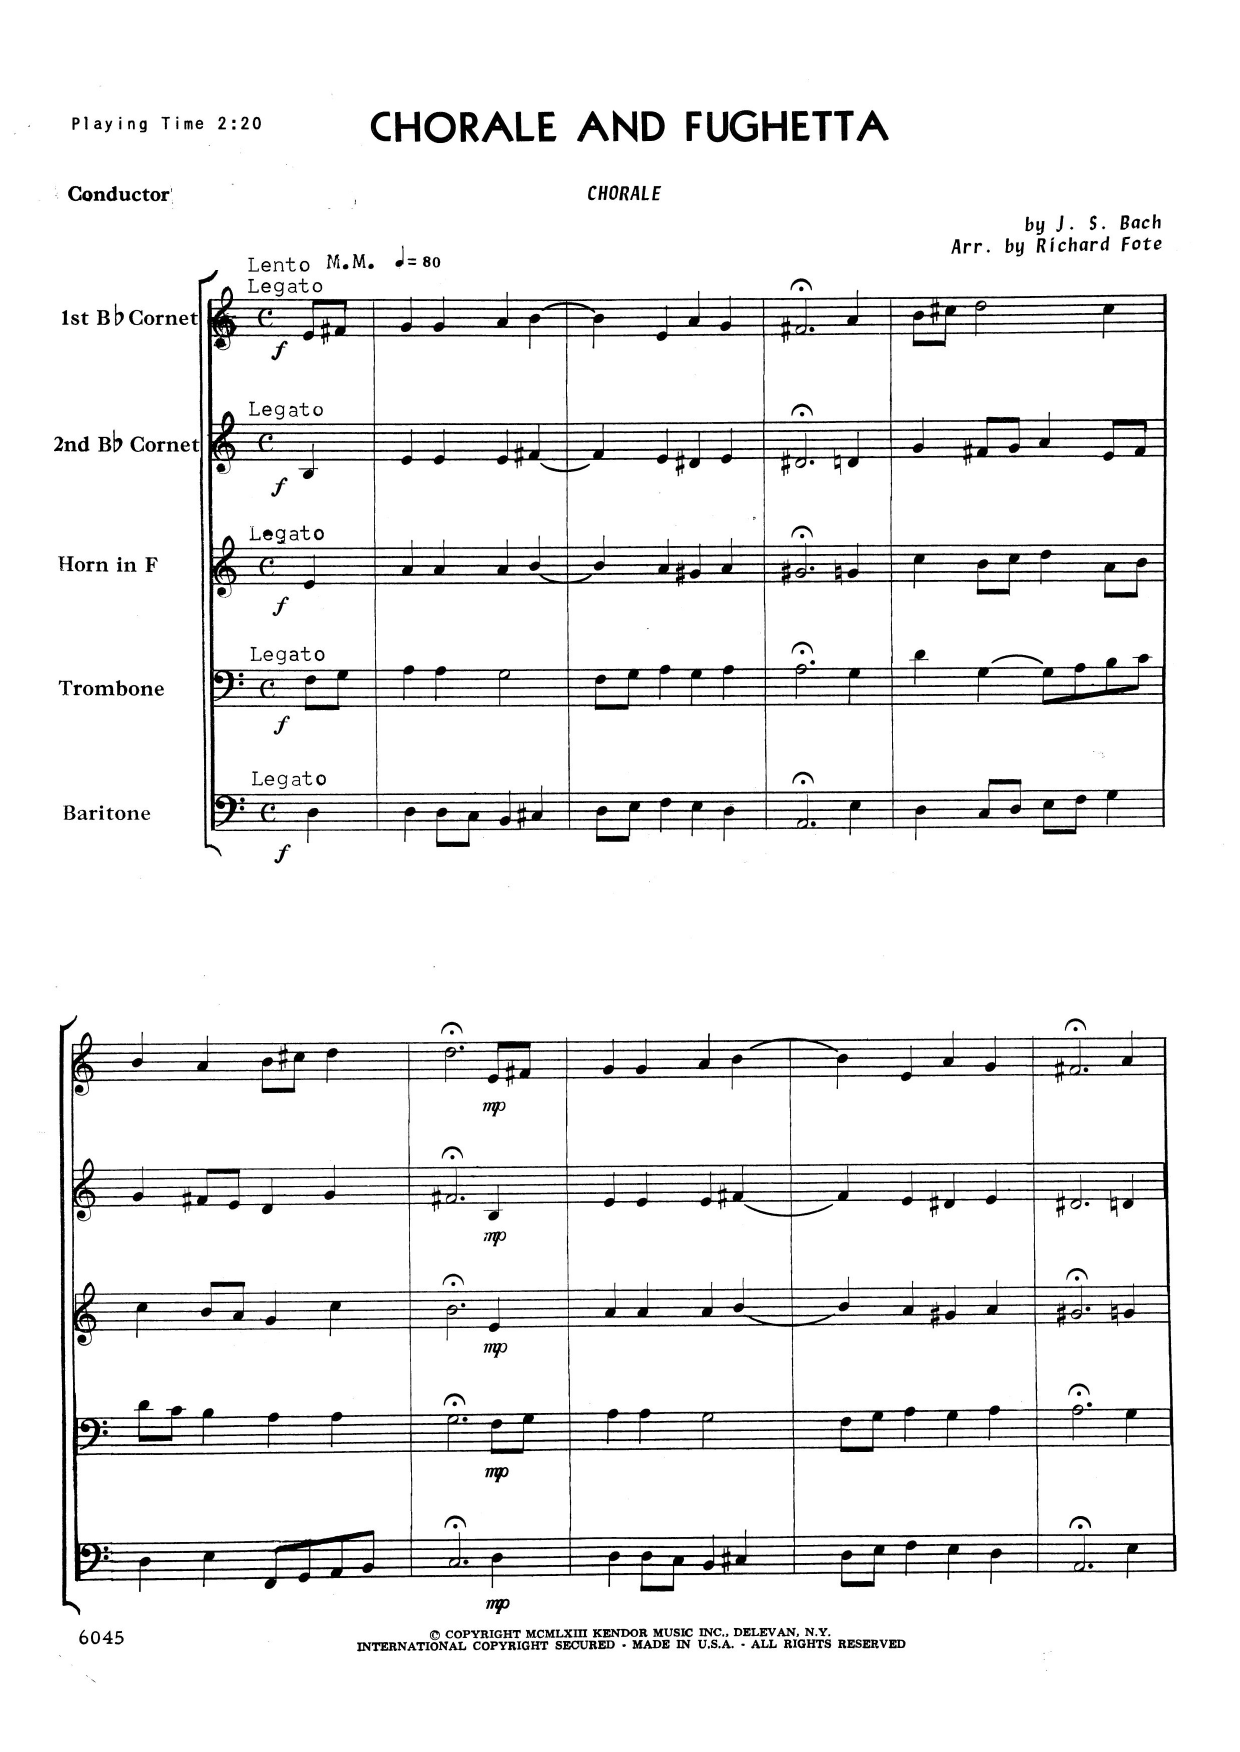 Download Richard Fote Chorale And Fughetta - Full Score Sheet Music